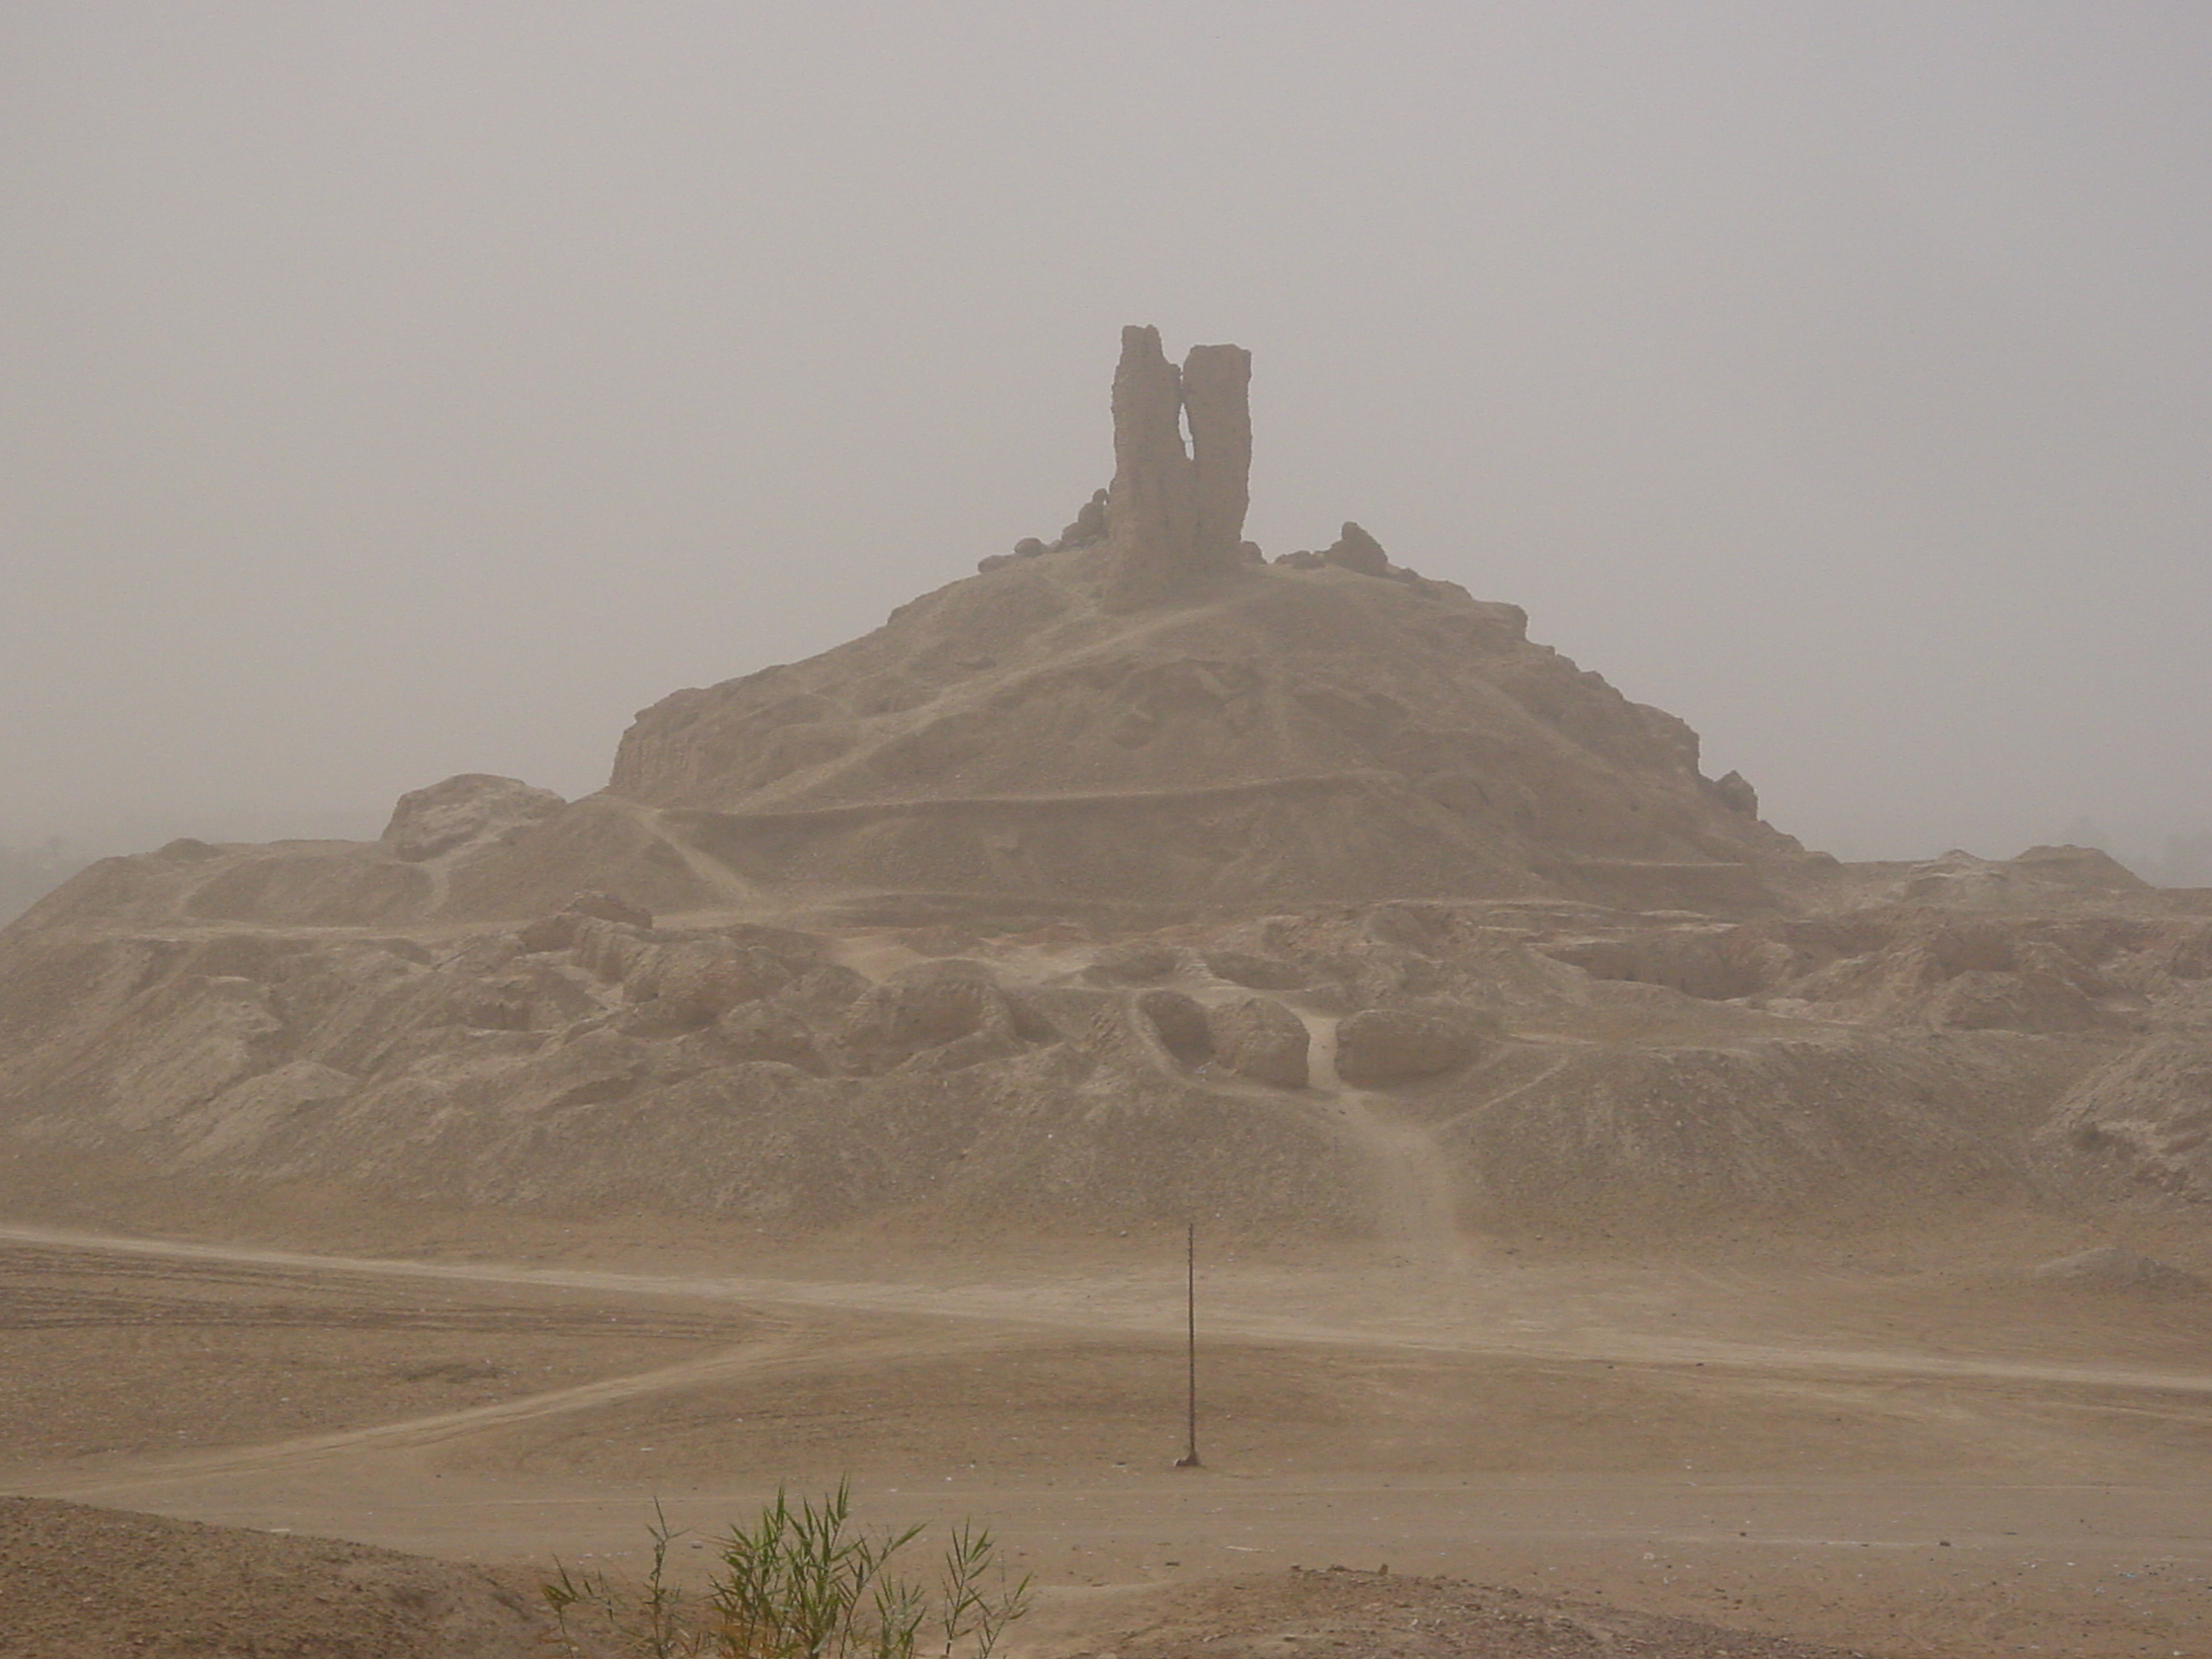 8 - Nabu's patron city of Borsippa & his ziggurat temple-residence